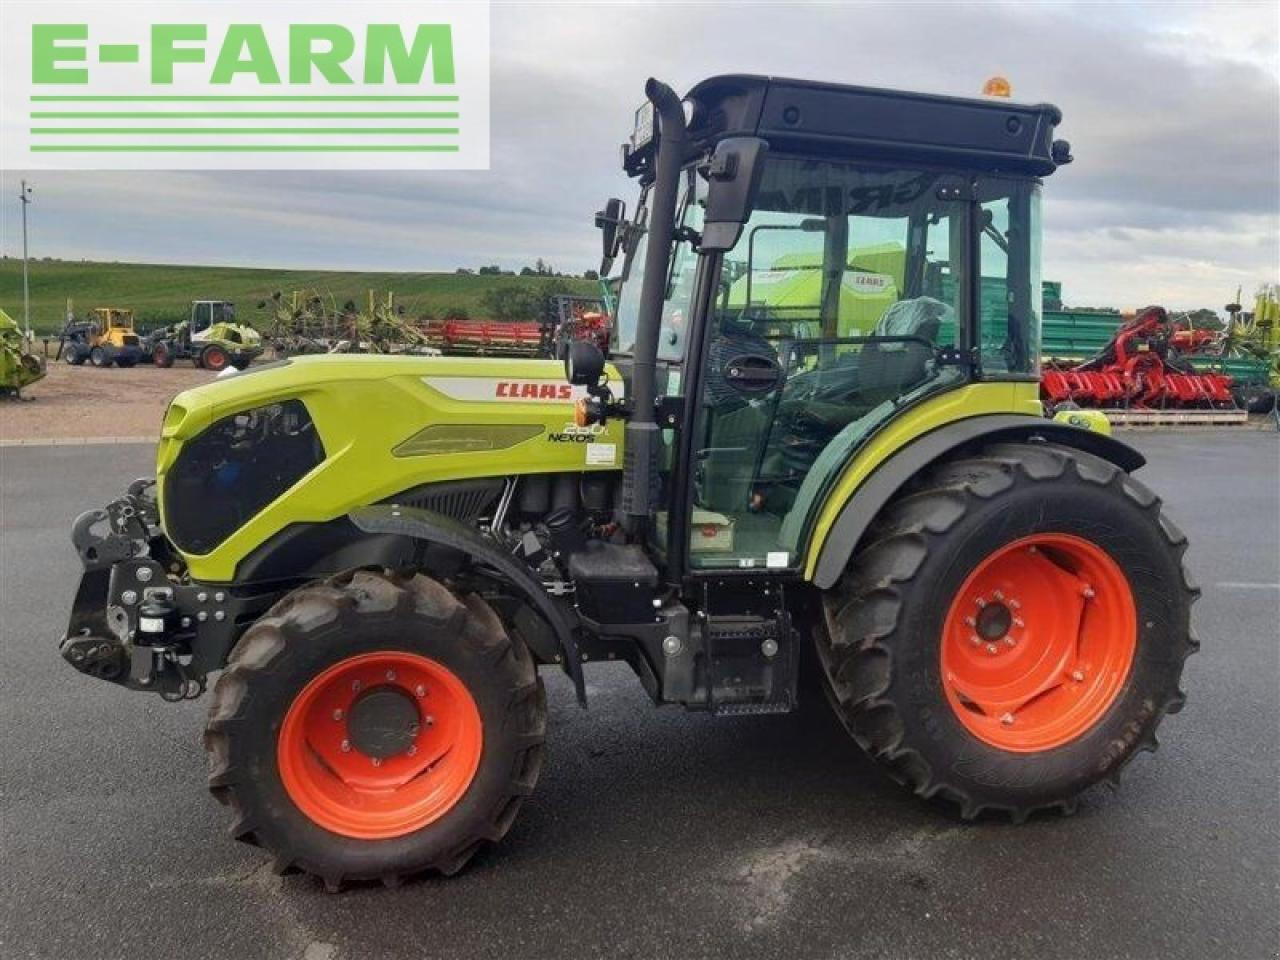 Farm tractor CLAAS nexos 260 l advanced